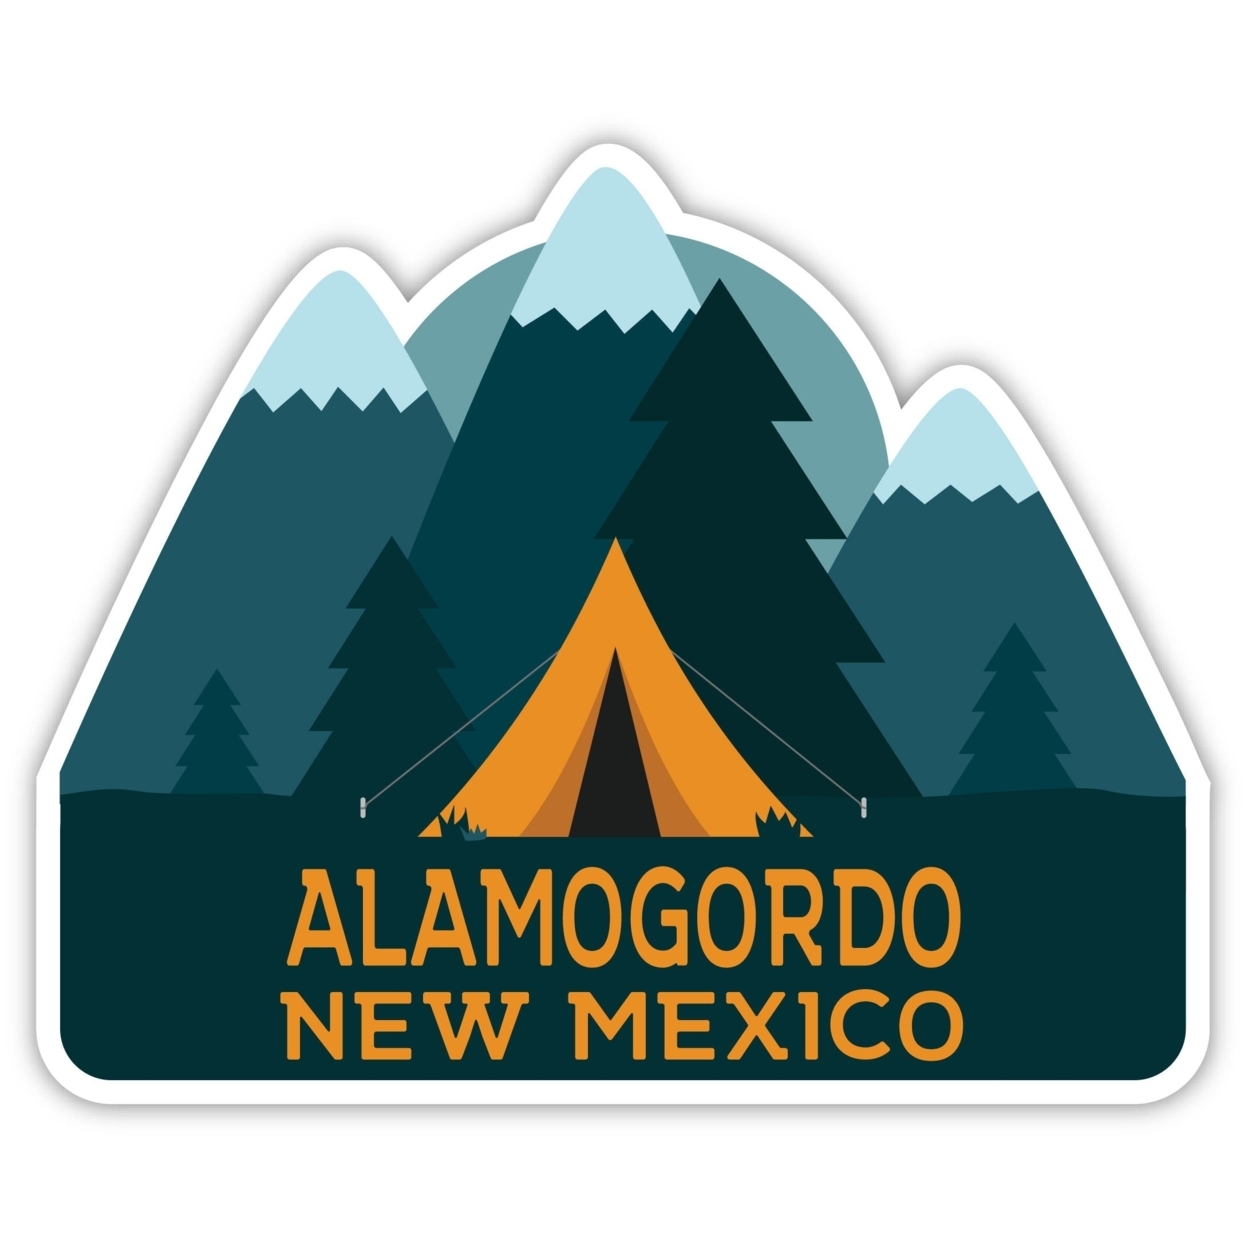 Alamogordo New Mexico Souvenir Decorative Stickers (Choose Theme And Size) - Single Unit, 4-Inch, Adventures Awaits